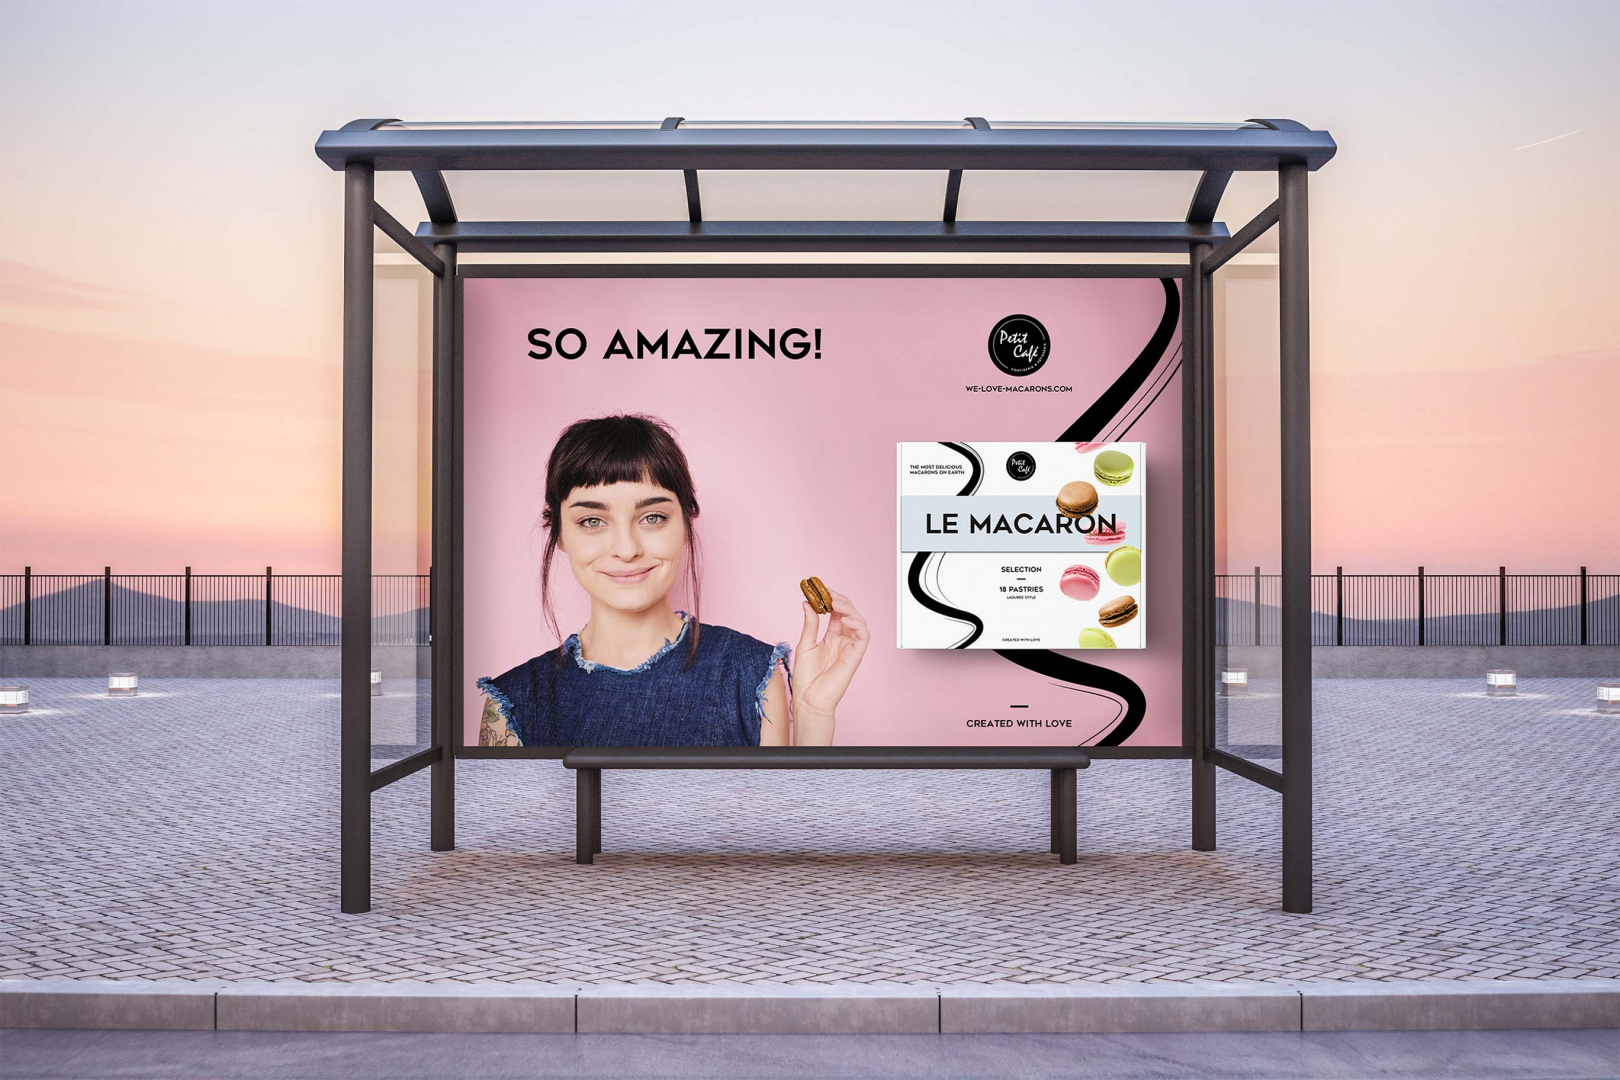 bus stop with big horizontal advertisement